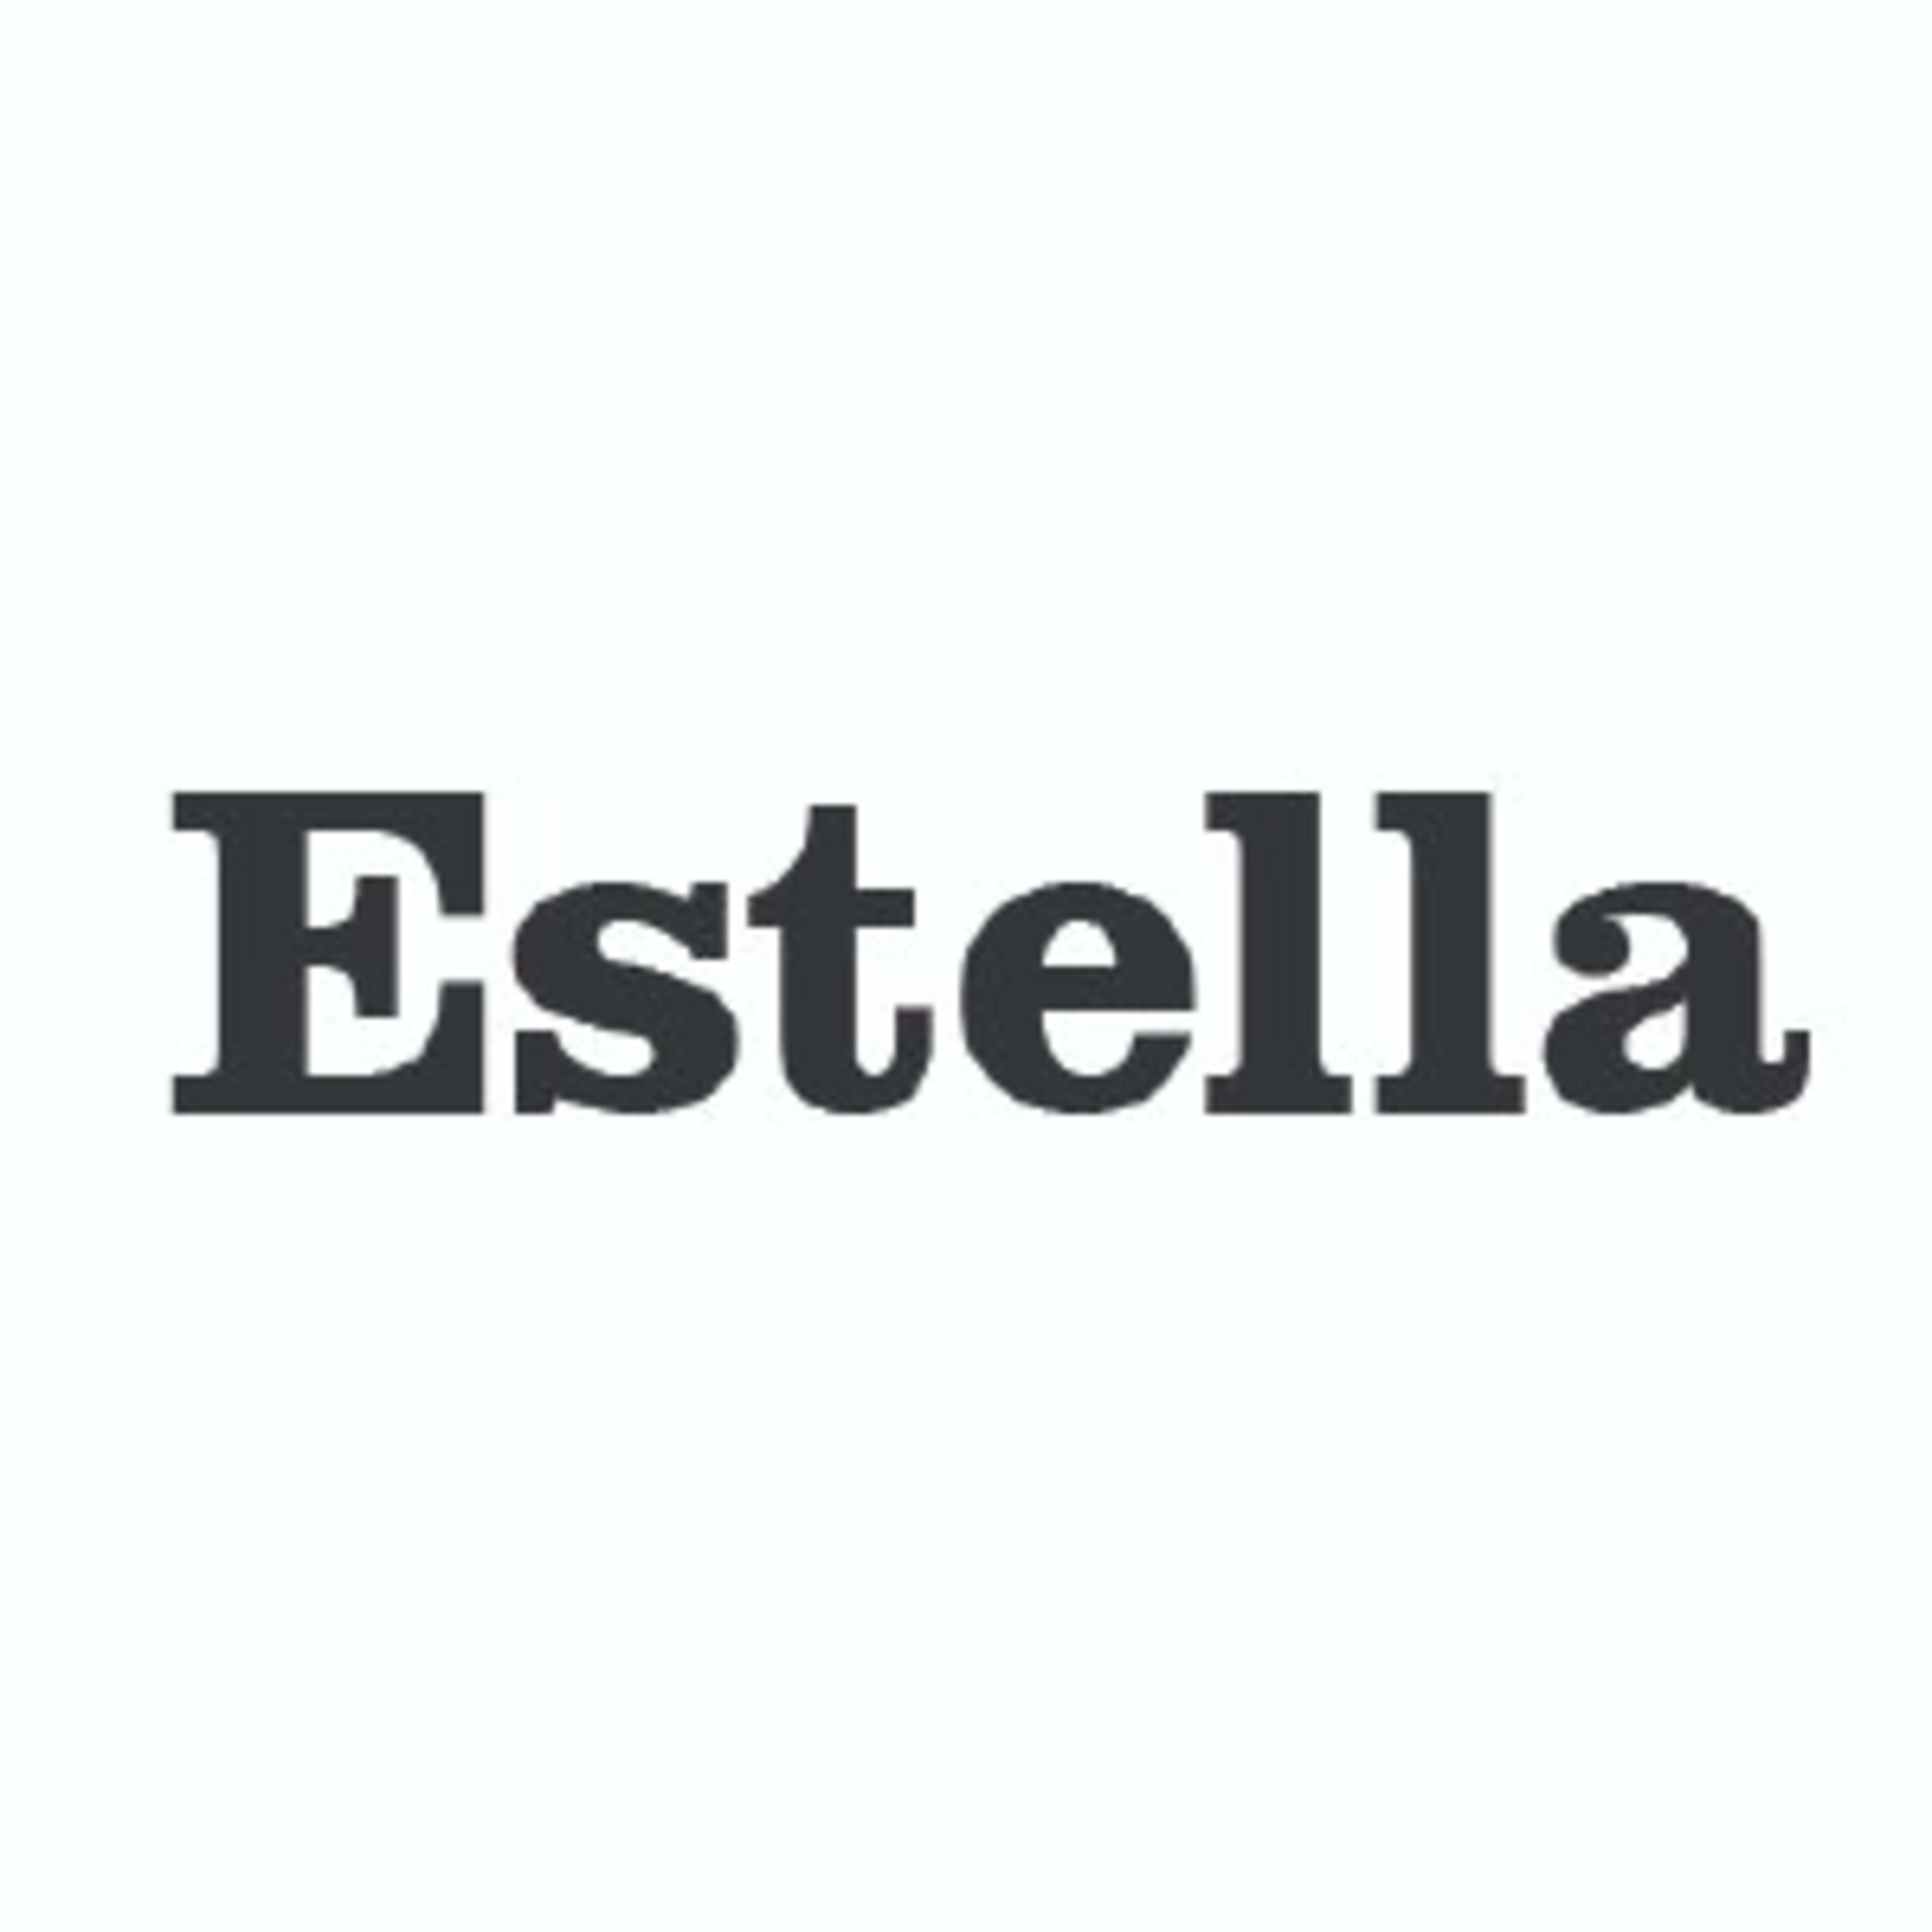 EstellaCode